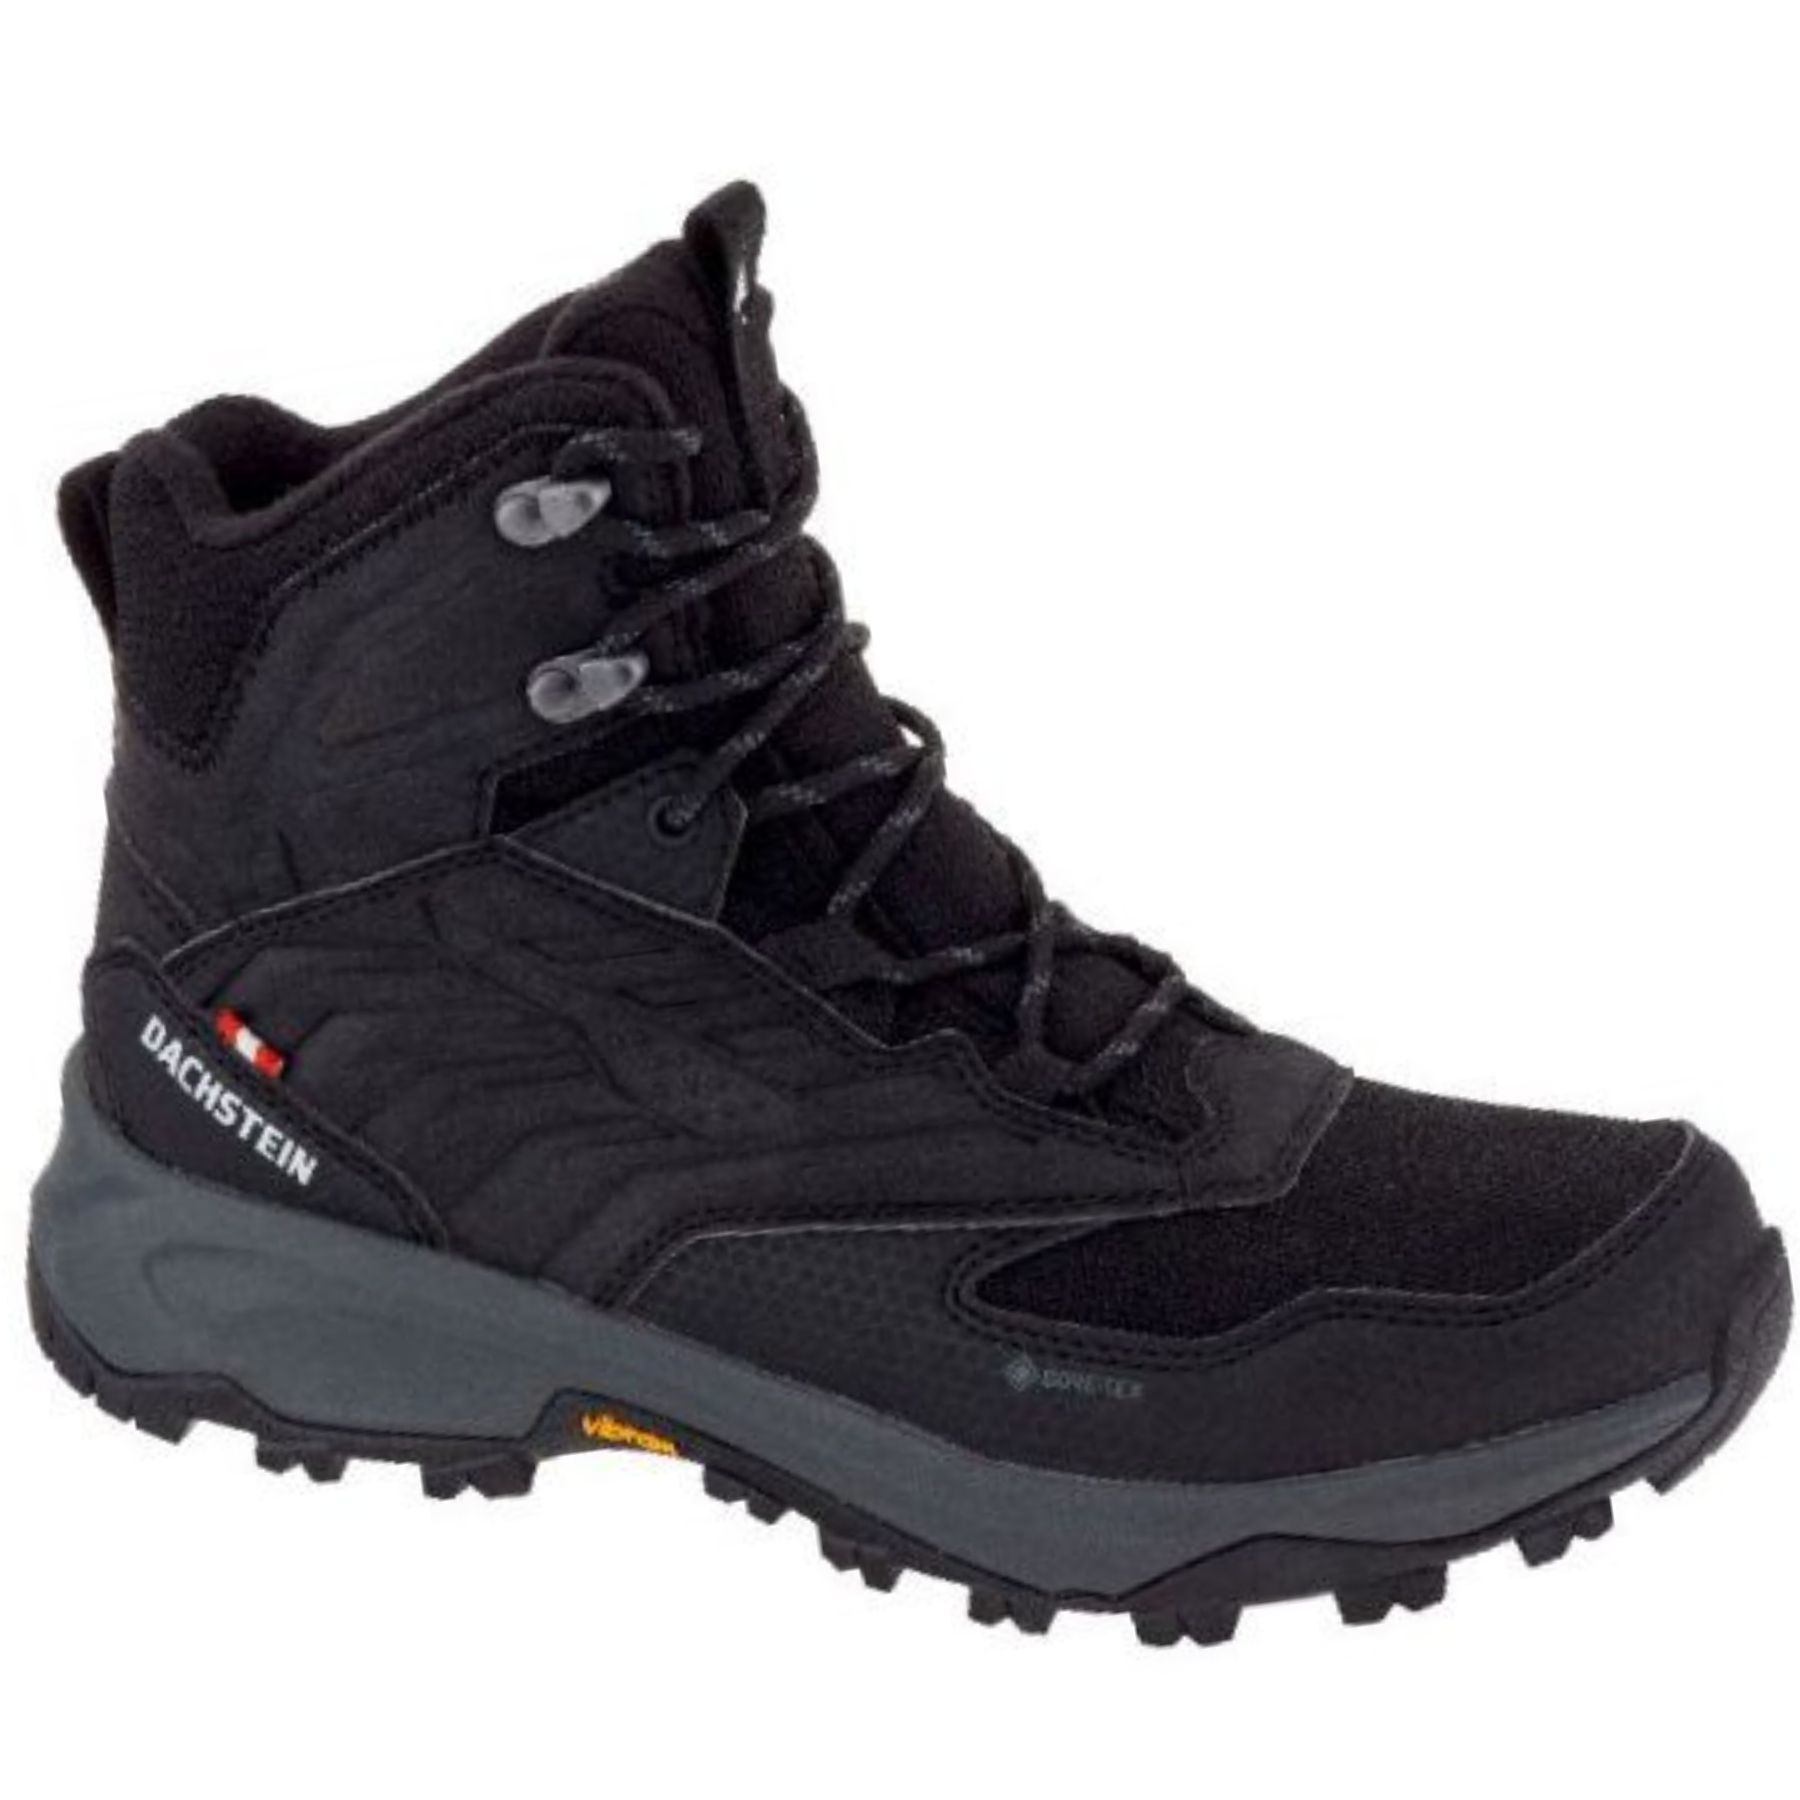 Dachstein Arctic Peak Mc GTX - Hiking shoes - Men's